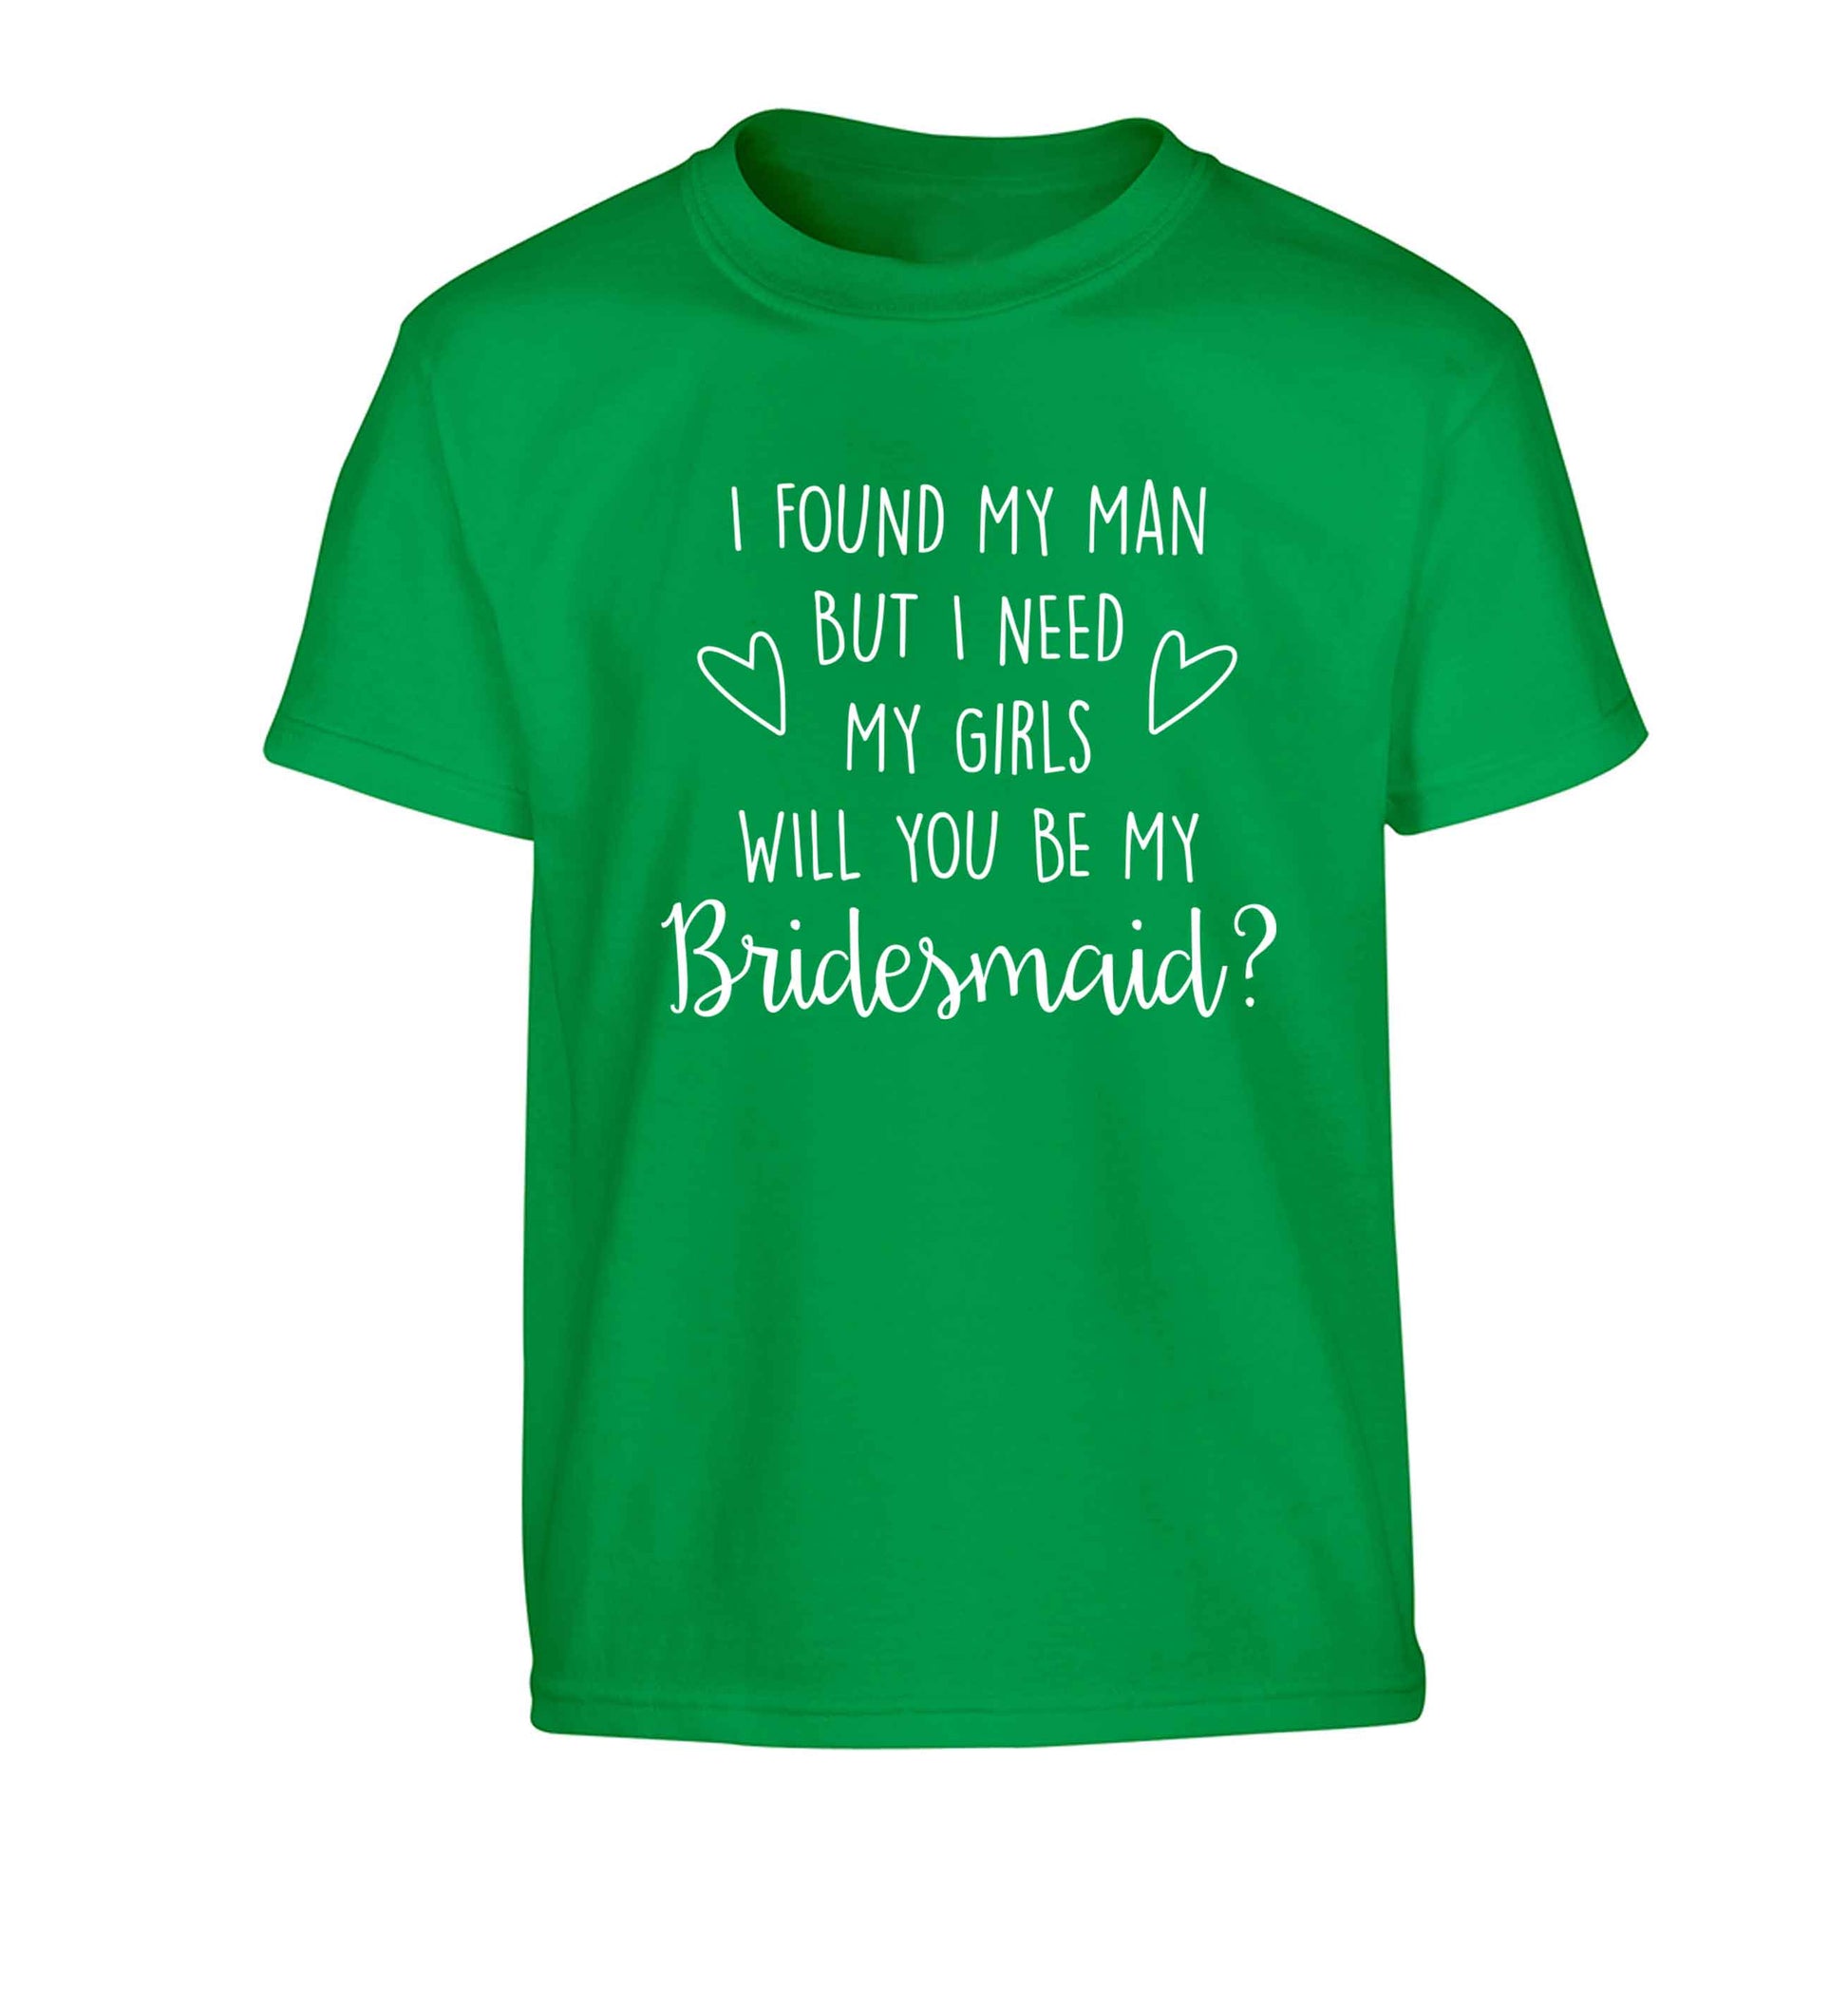 I found my man but I need my girls will you be my bridesmaid? Children's green Tshirt 12-13 Years